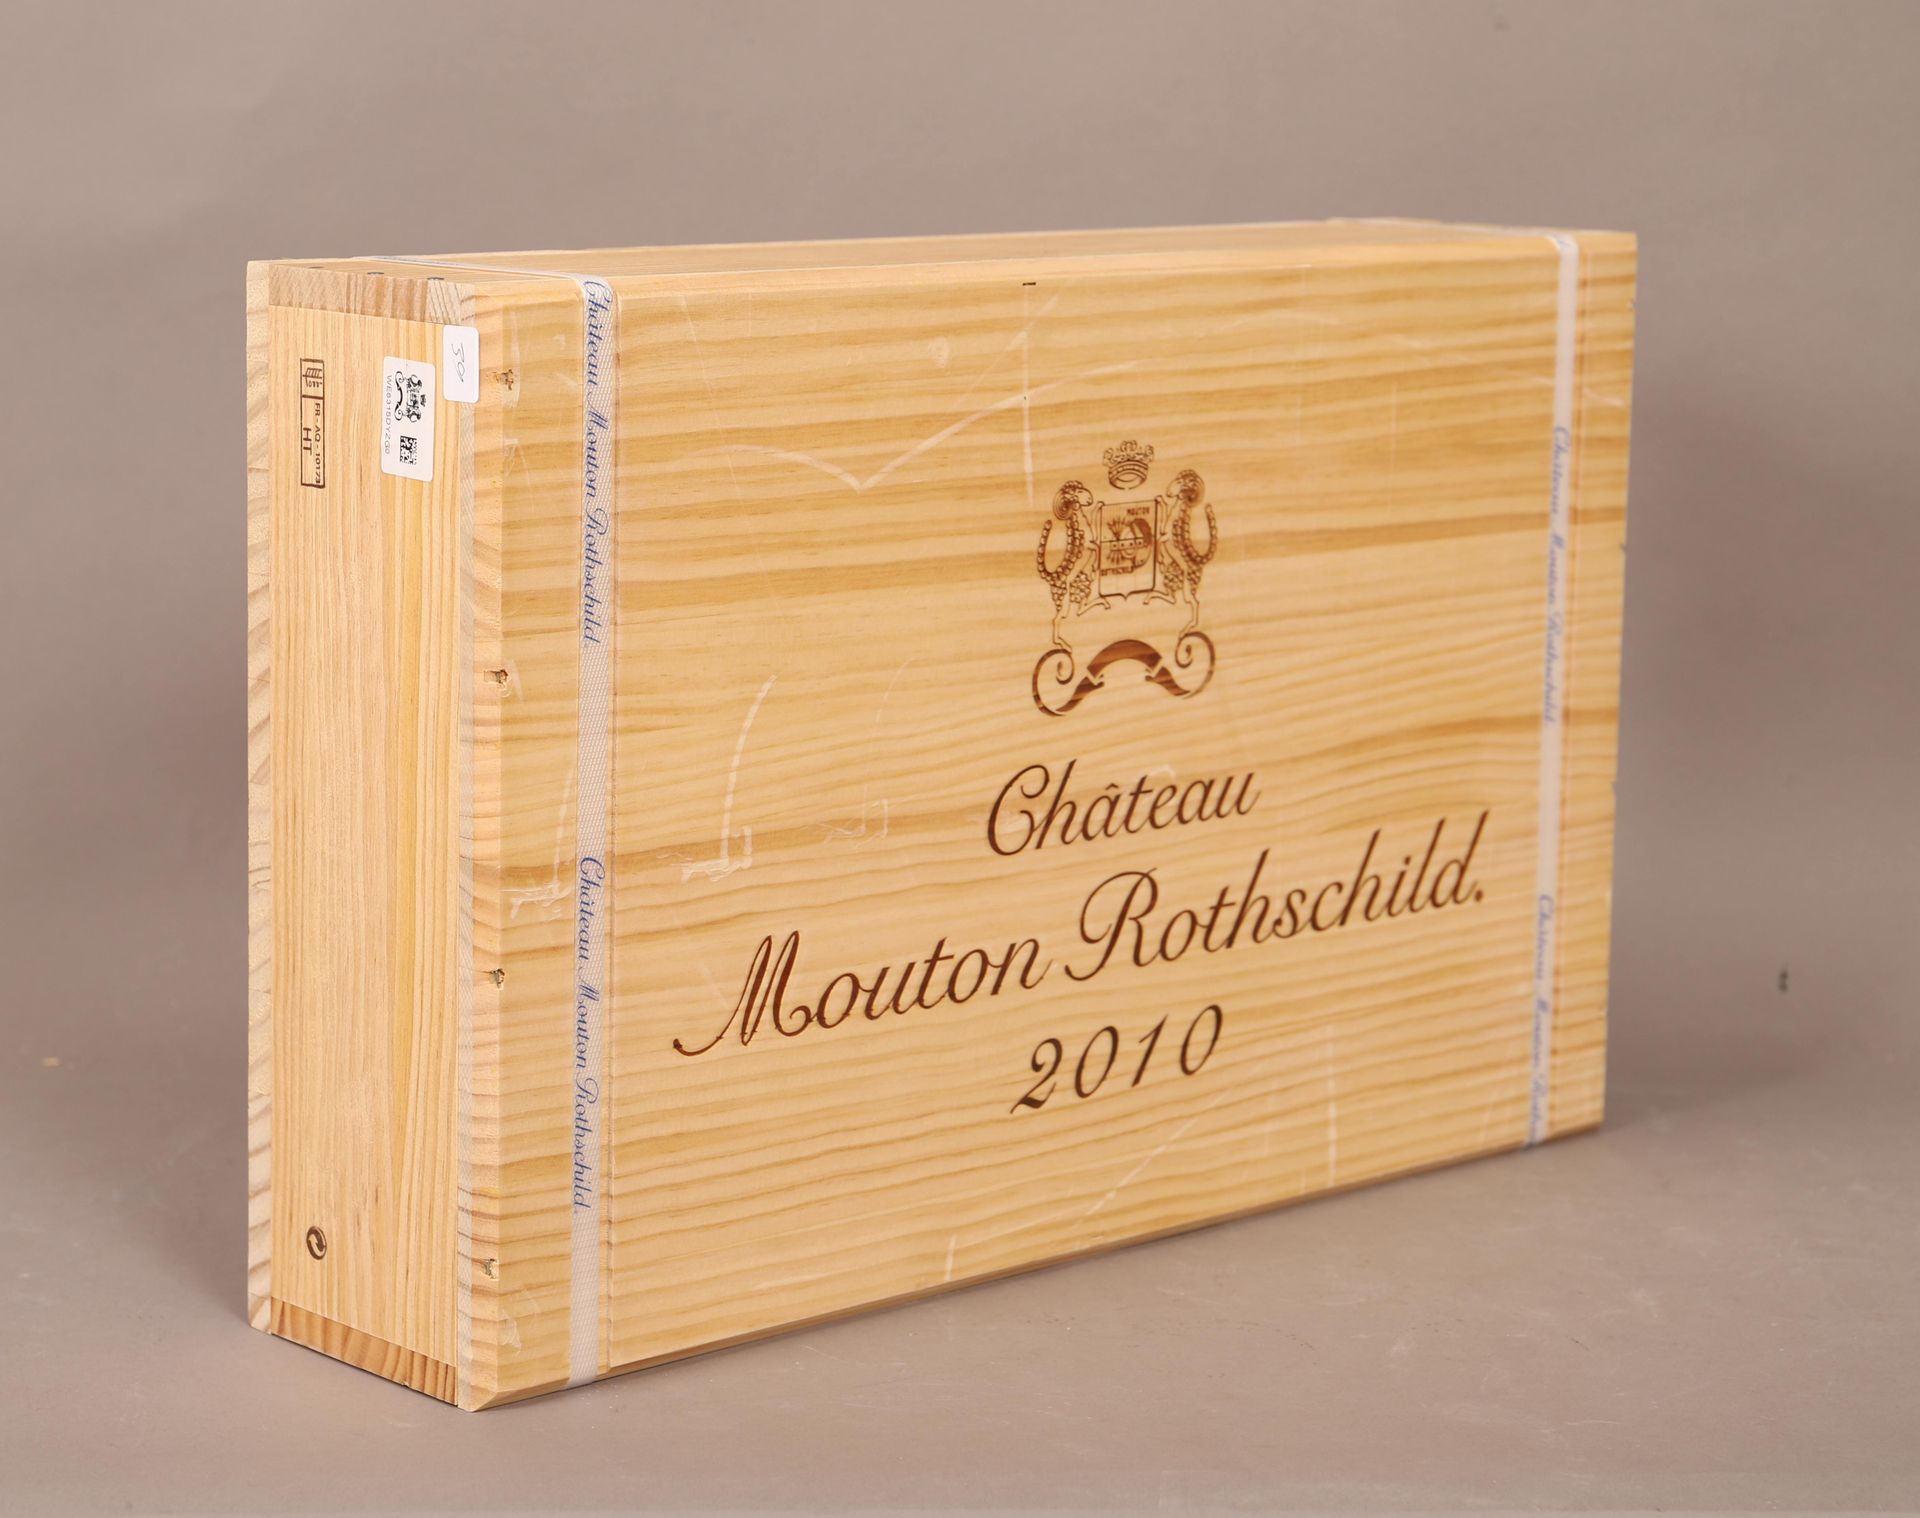 Null Château Mouton Rothschild (x6)

Pauillac

2010

CBF

0,75L